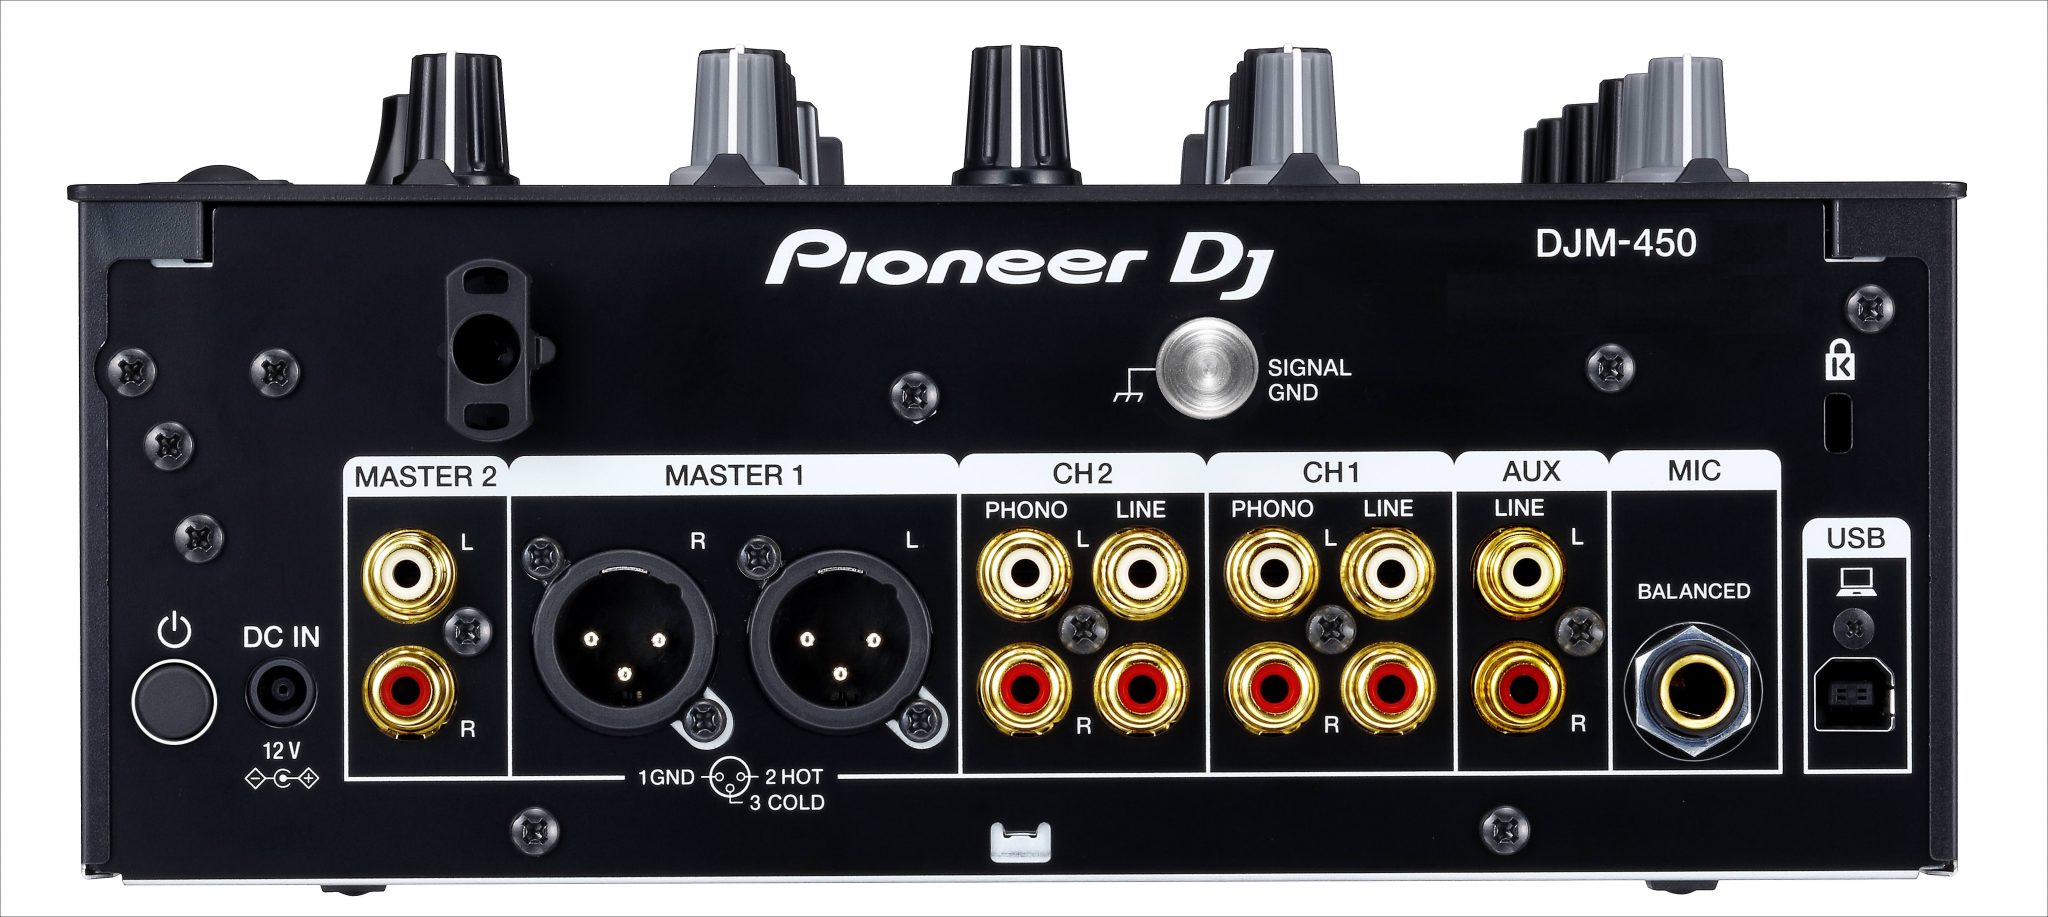 BPM 2016: DVS ready Pioneer DJ DJM-450 mixer • DJWORX